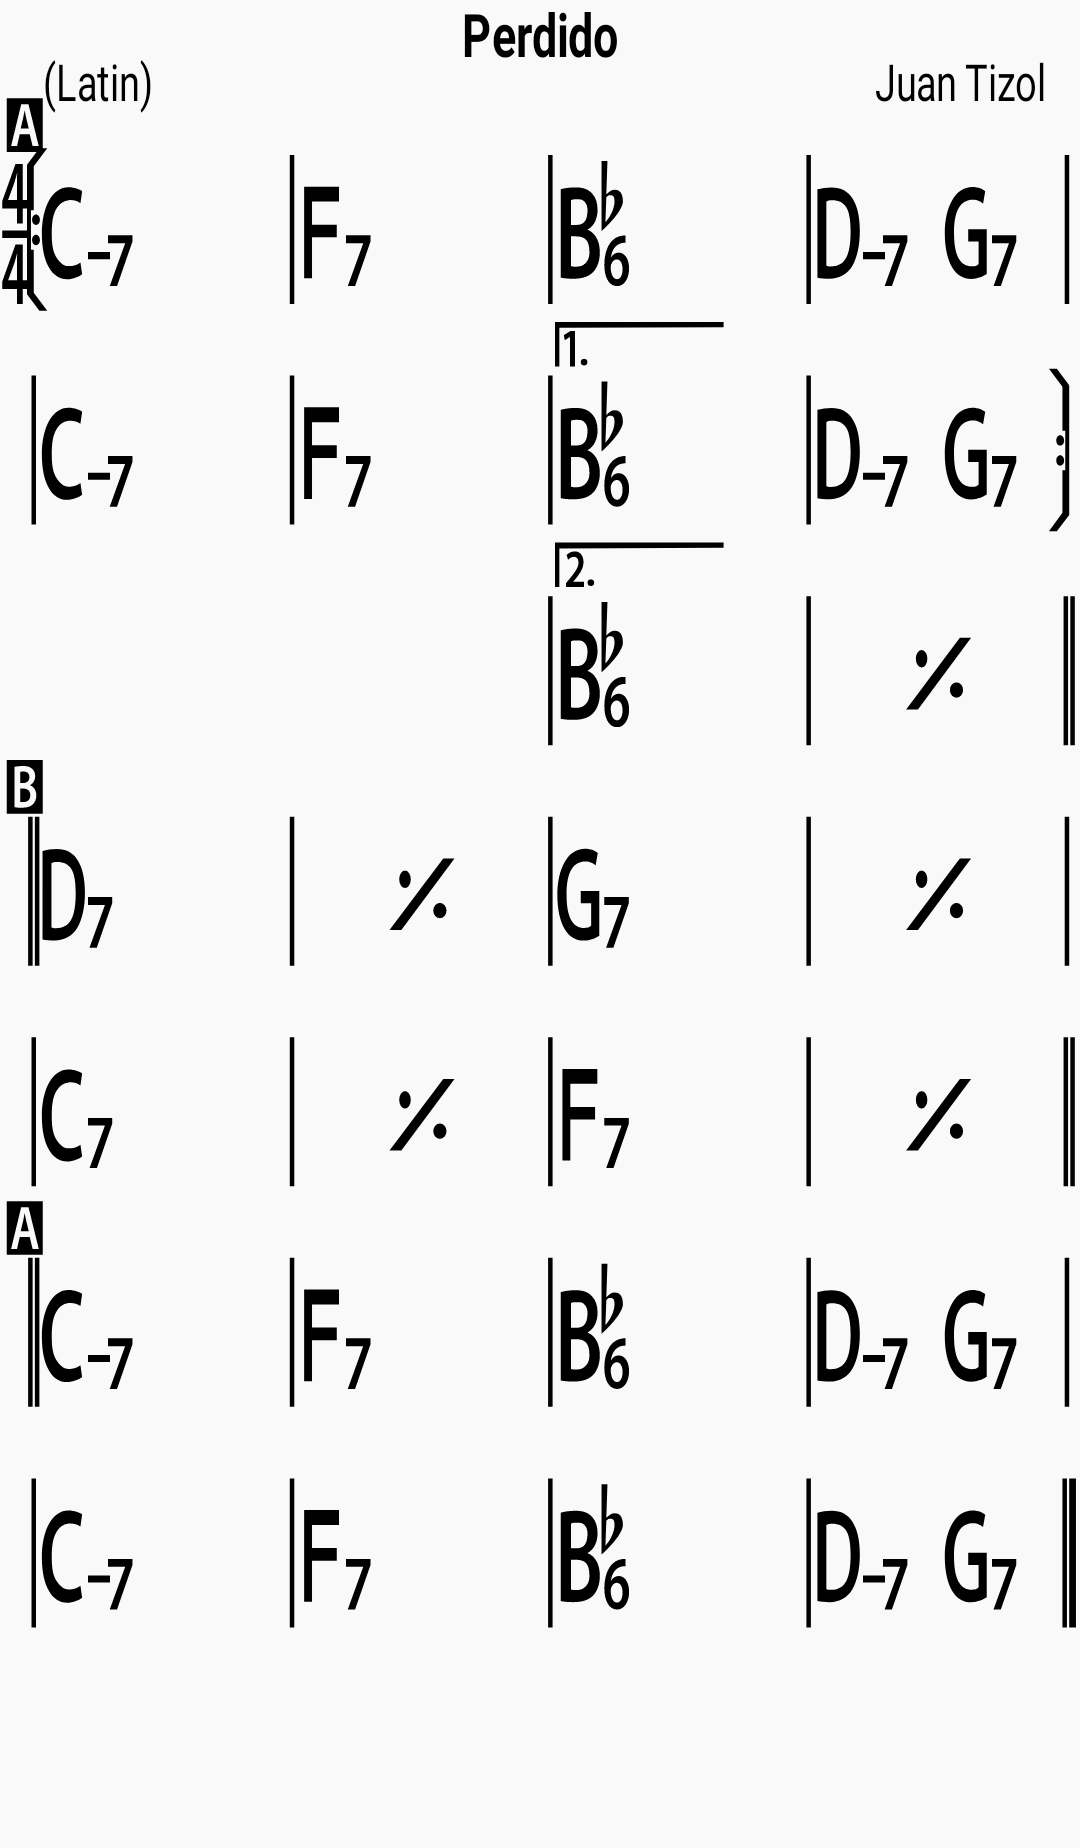 Chord chart for the jazz standard Perdido